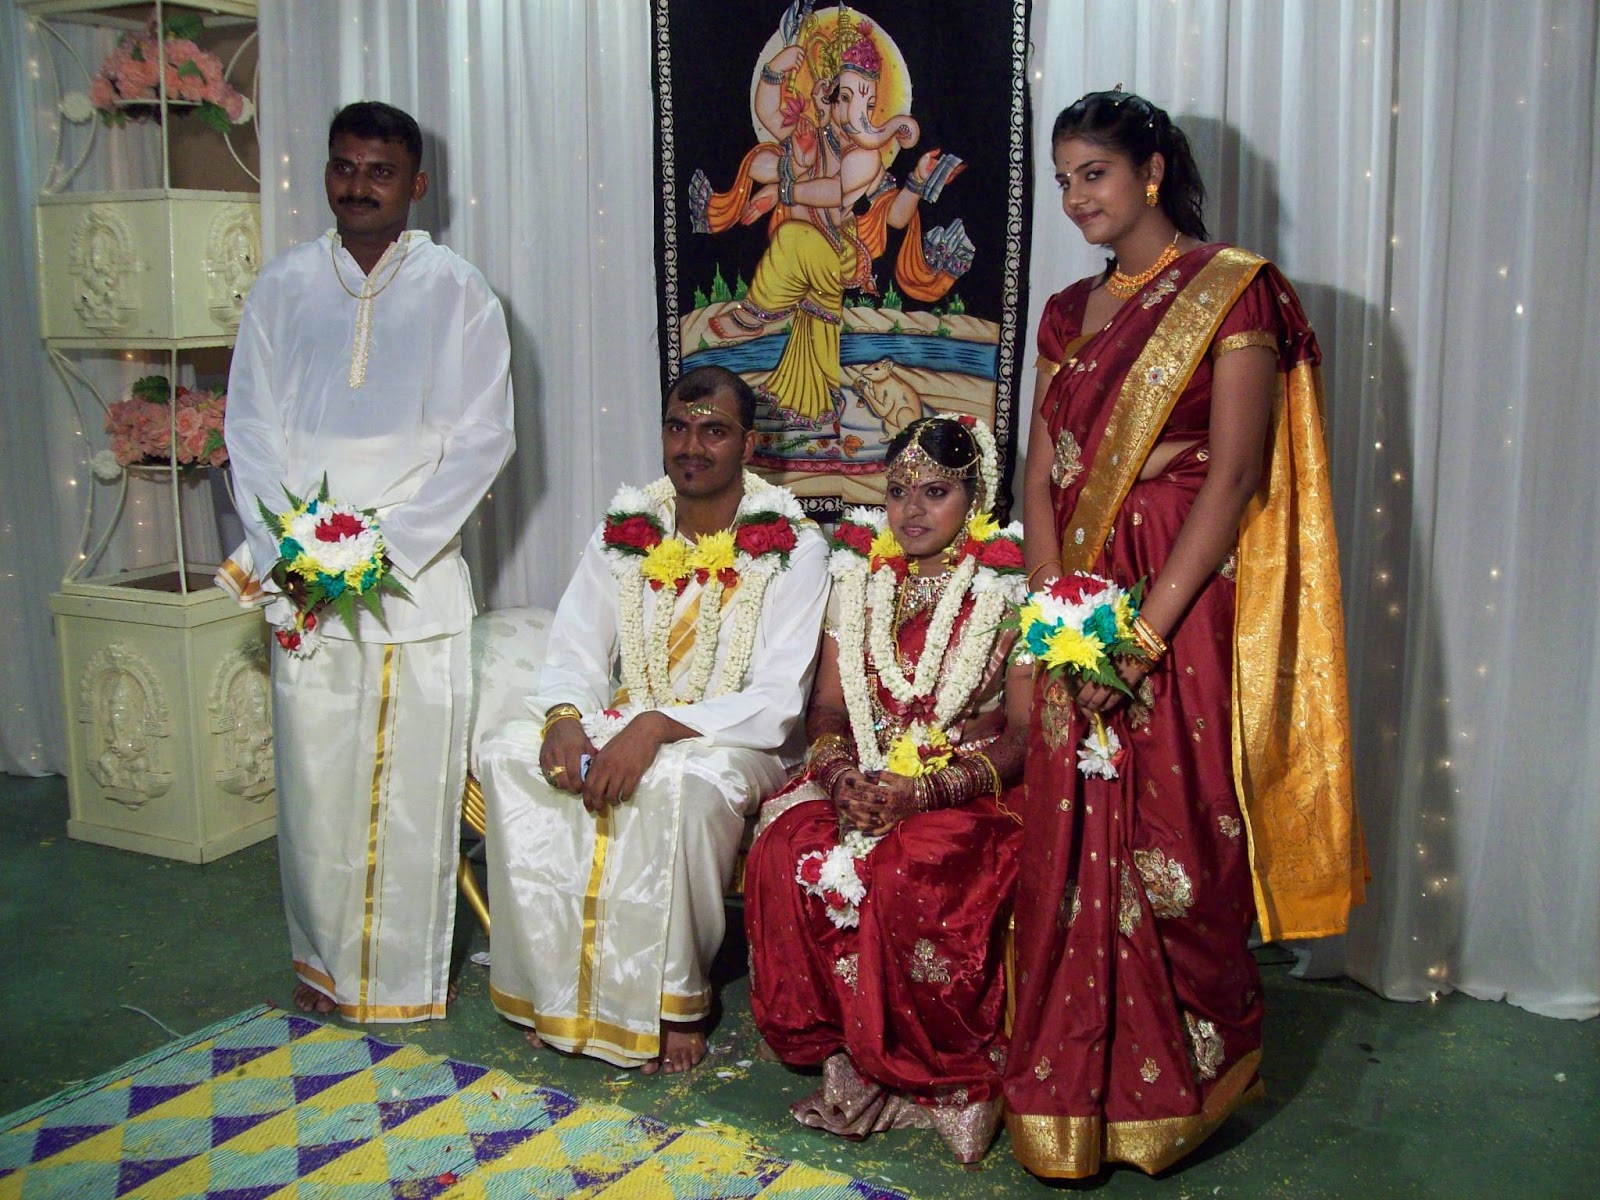  Gambar  Pengantin India  image perkahwinan masyarakat 